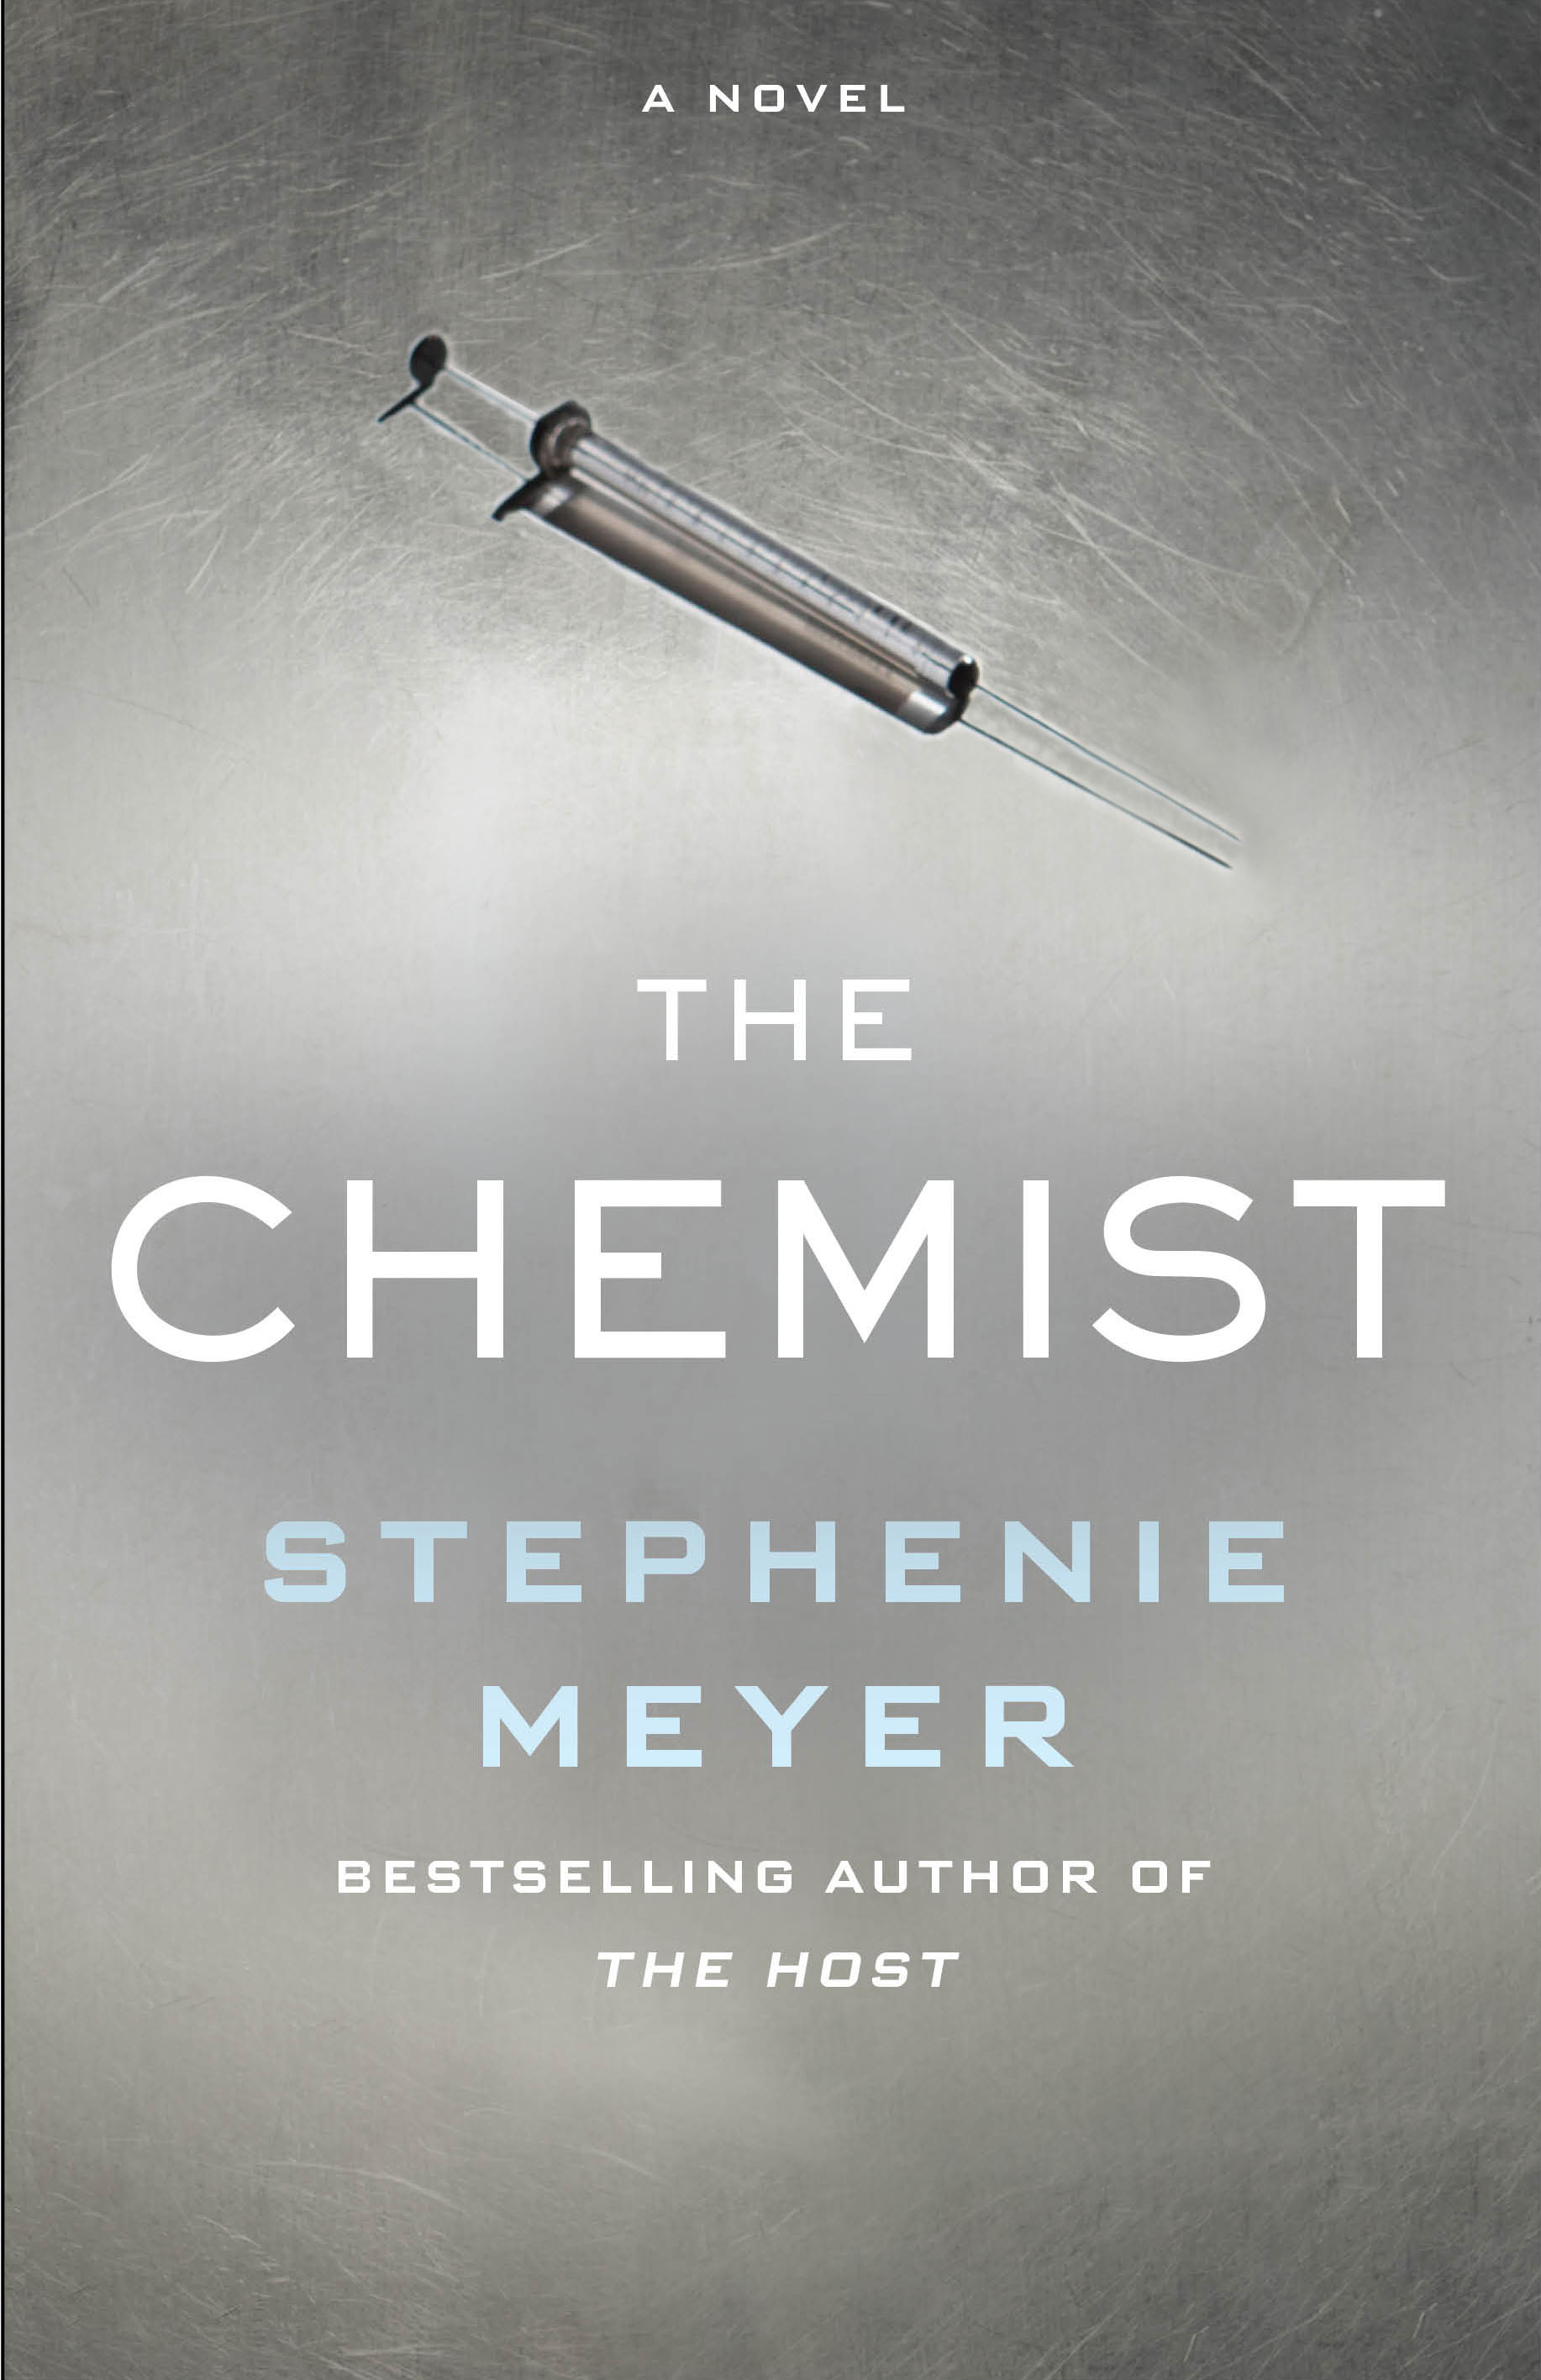 Image result for the chemist meyer